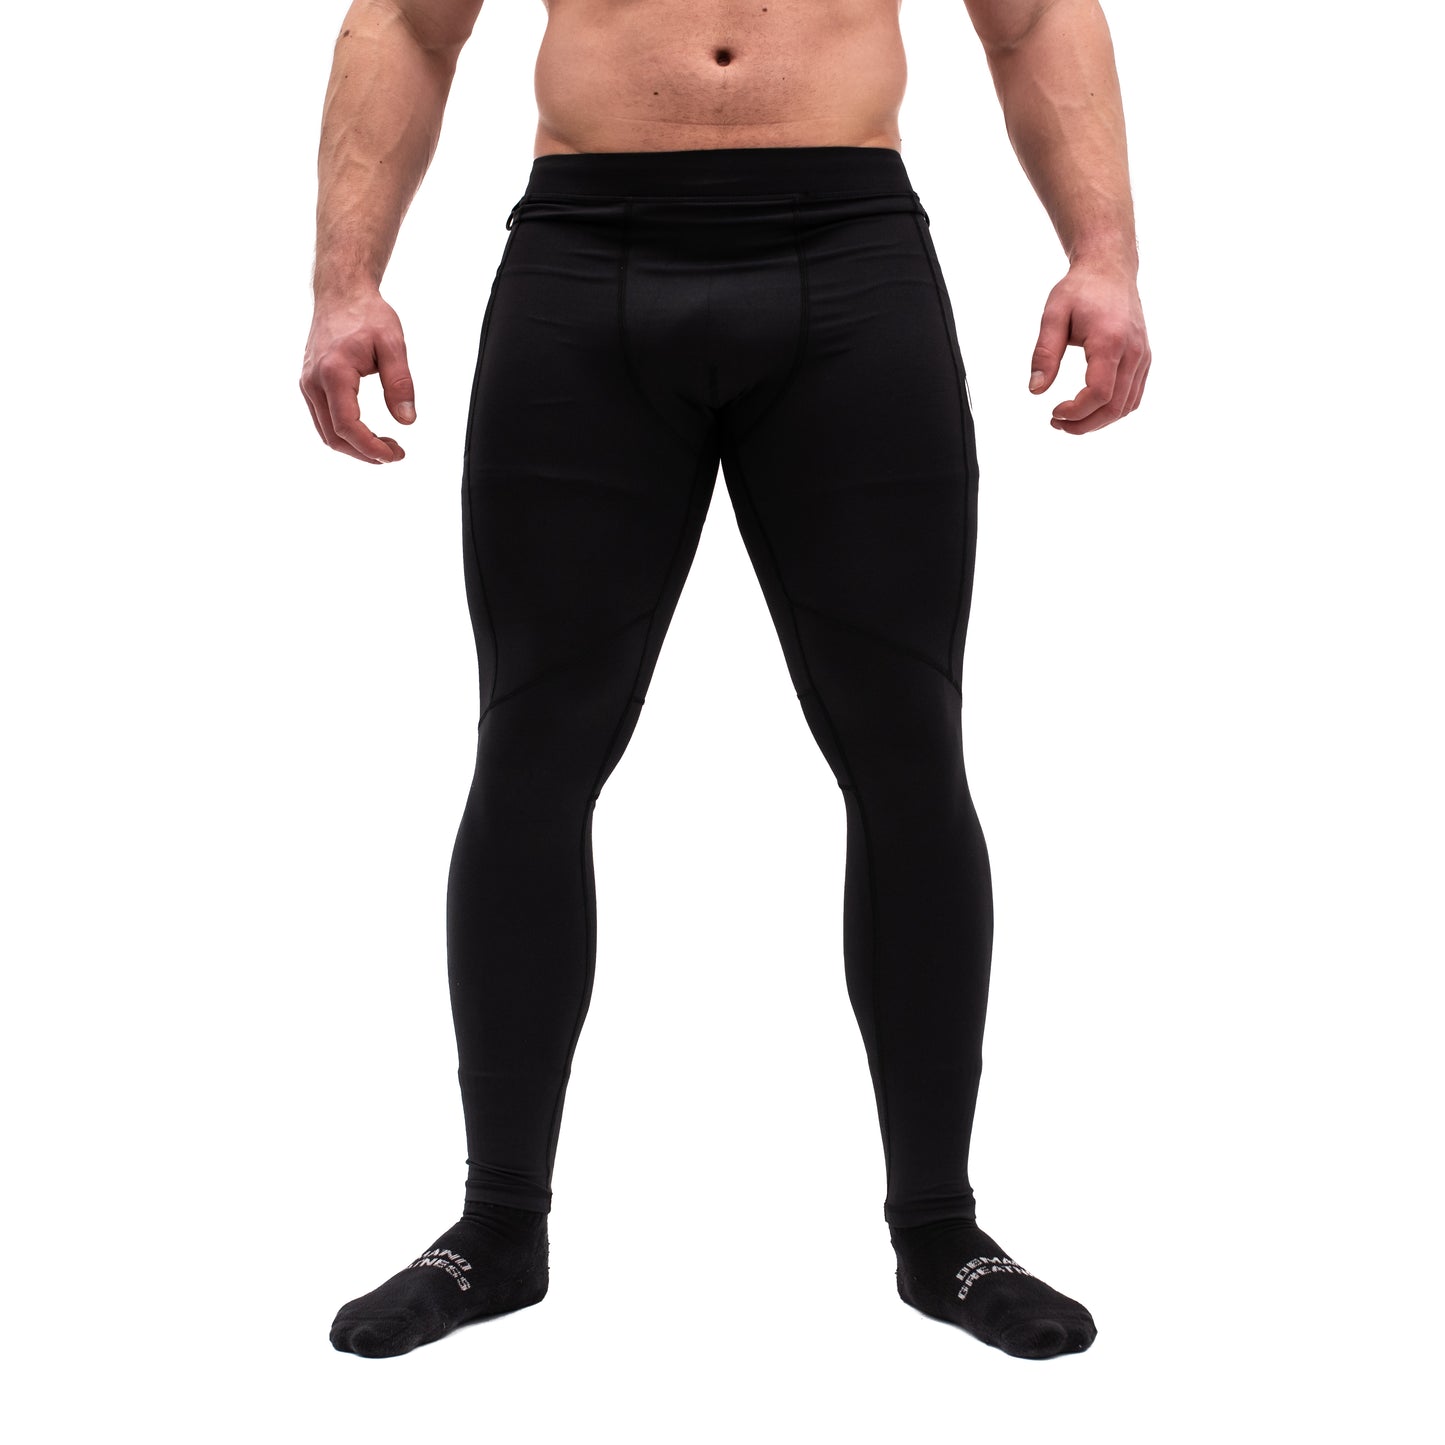 Stoko Compression Pants Men's Black Used XL